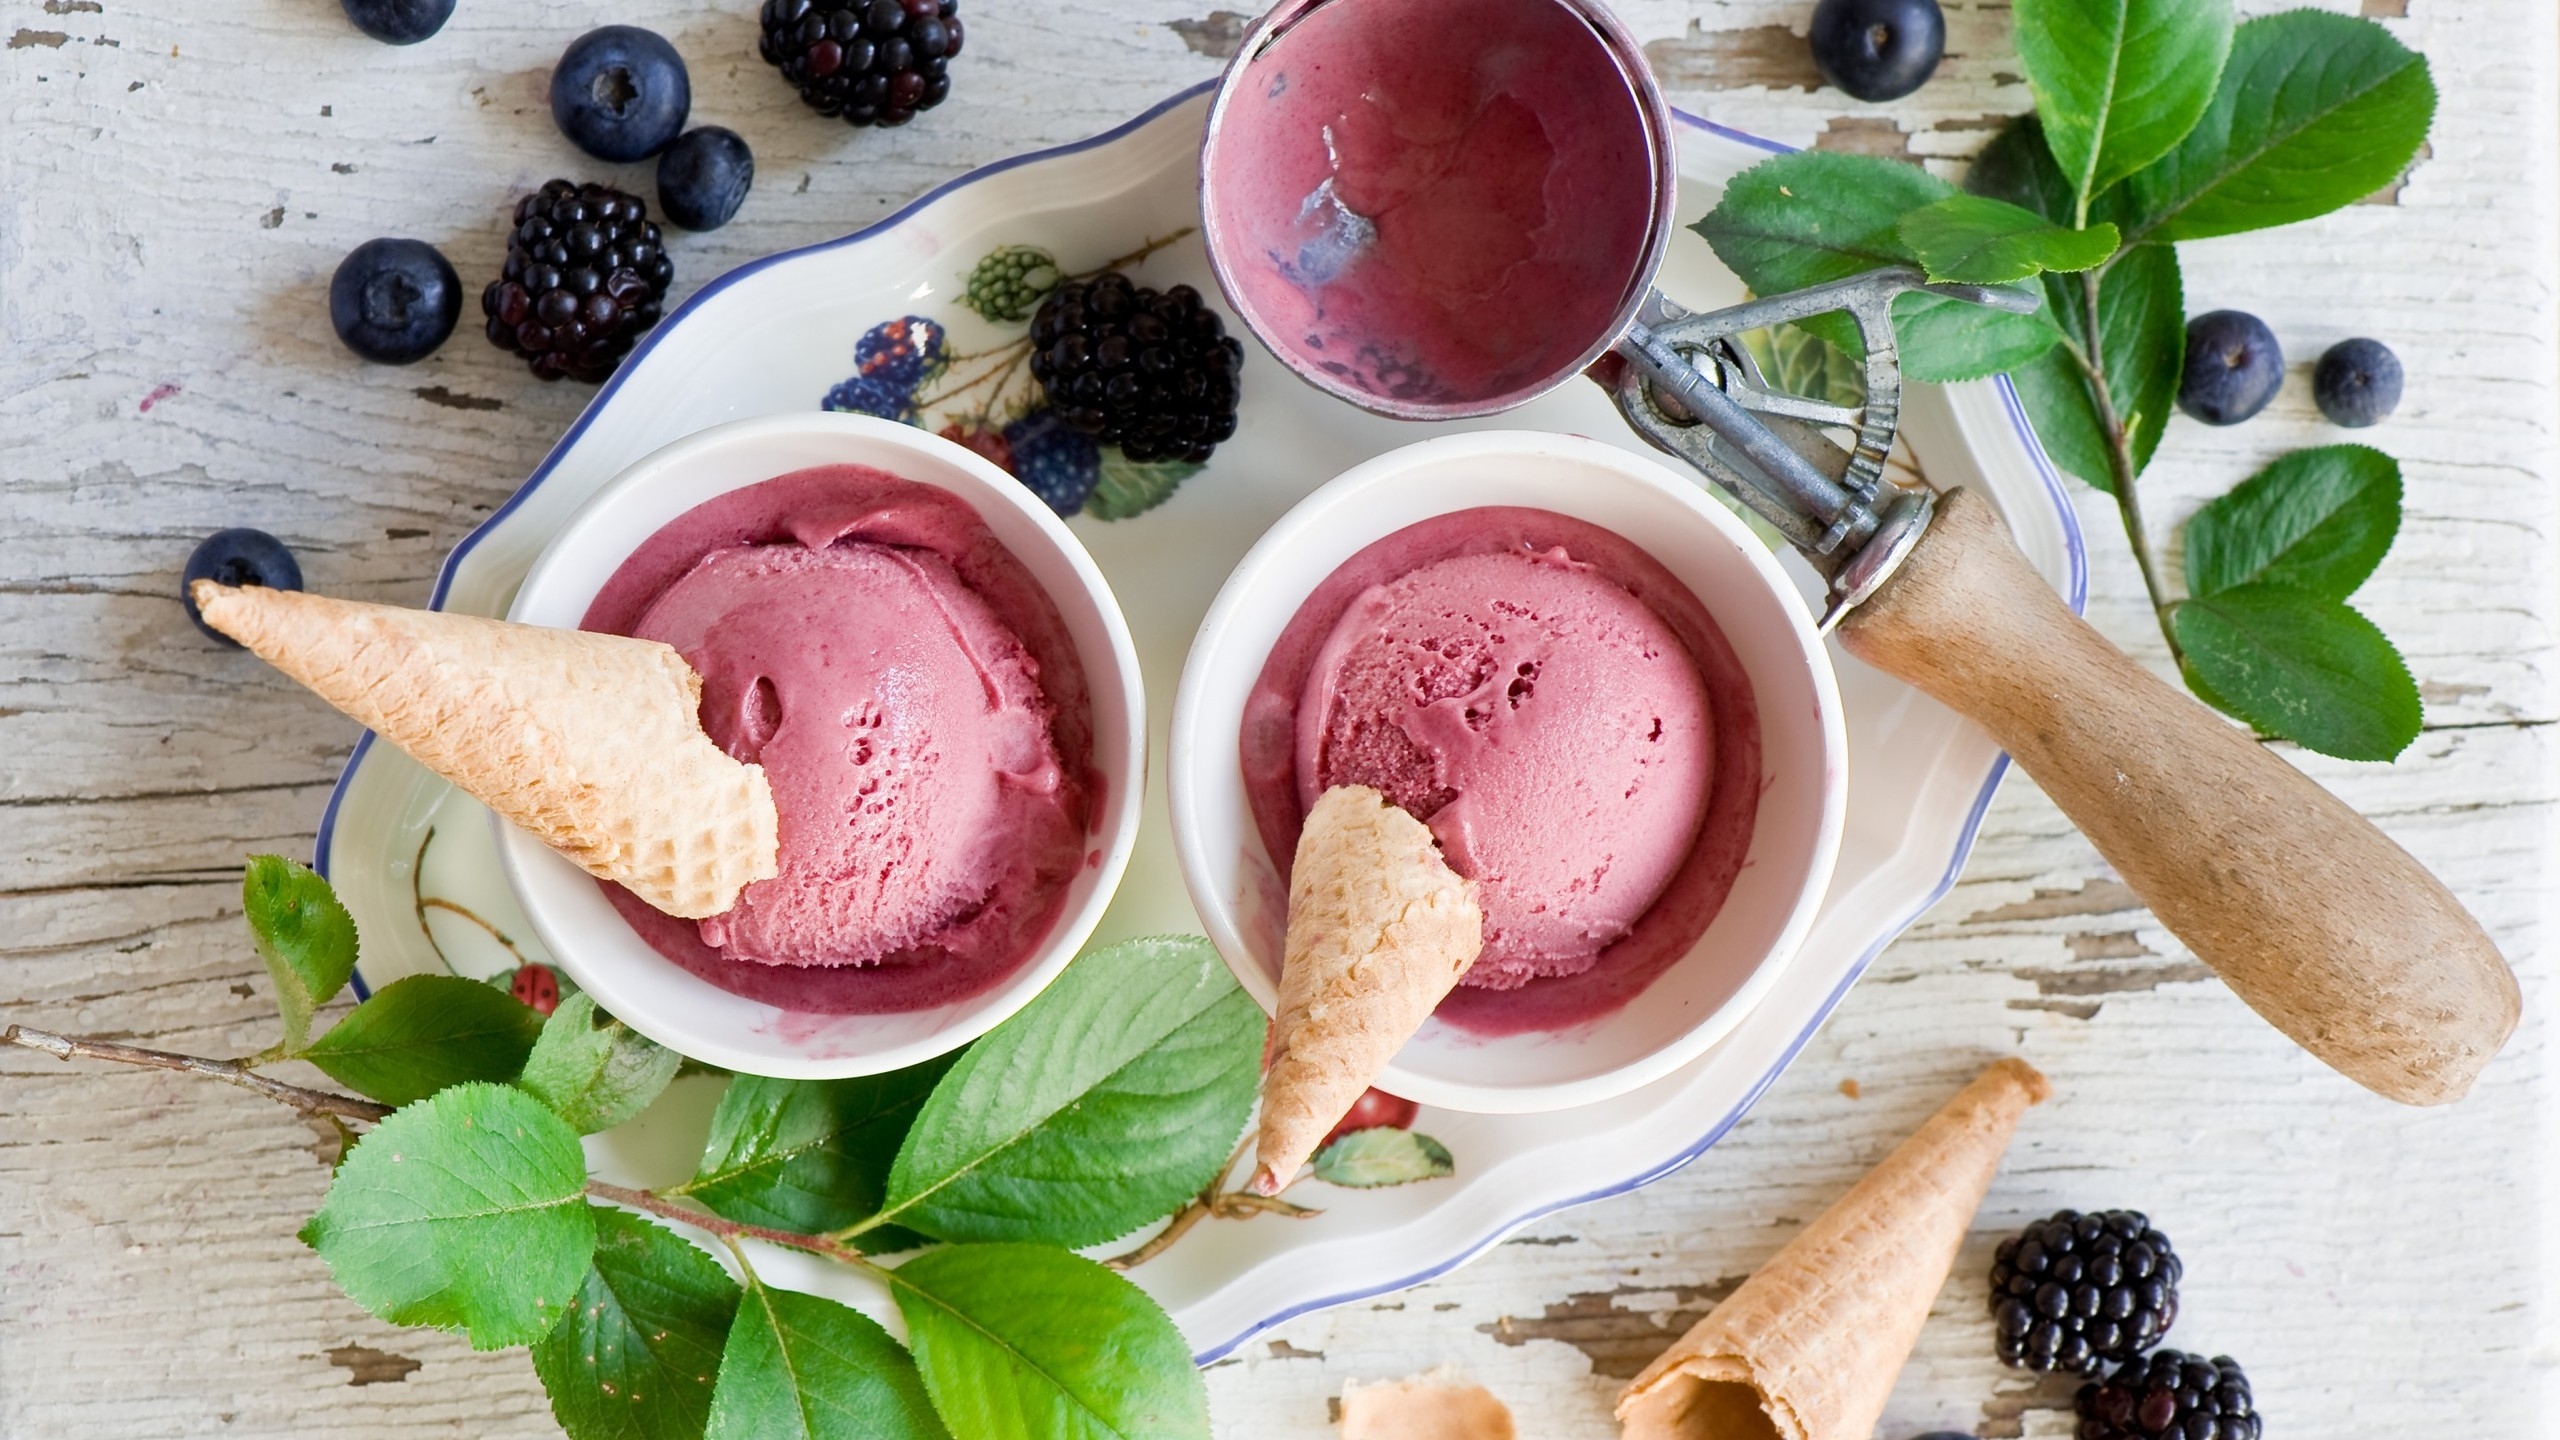 Berries Ice Cream  for 2560x1440 HDTV resolution